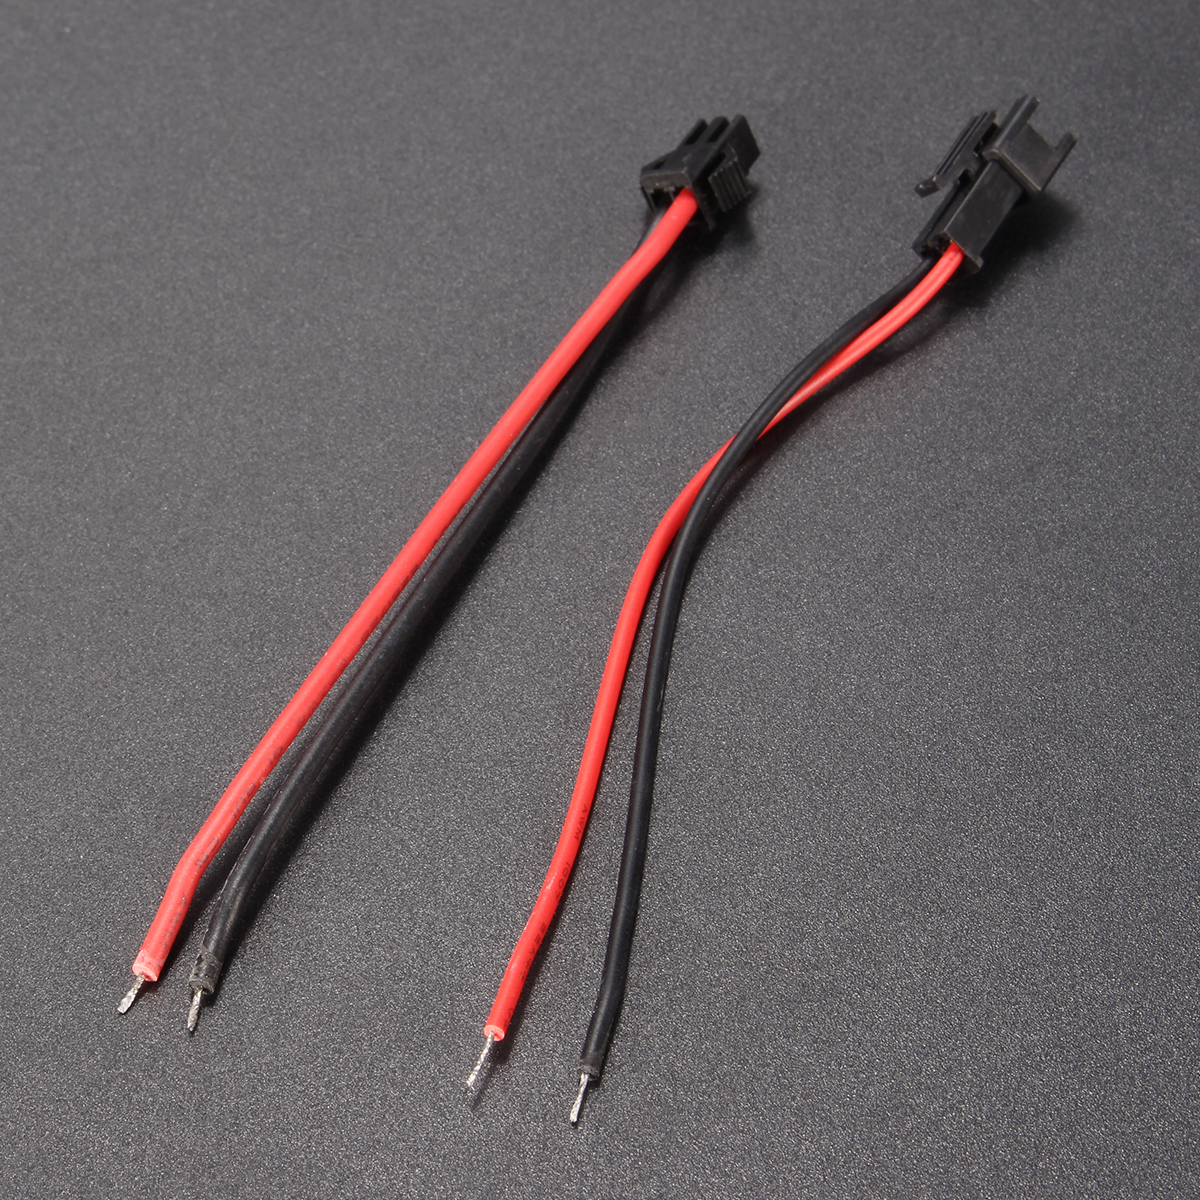 30pcs 12cm Long Jst Sm 2pins Plug Male To Female Wire Jst Connector